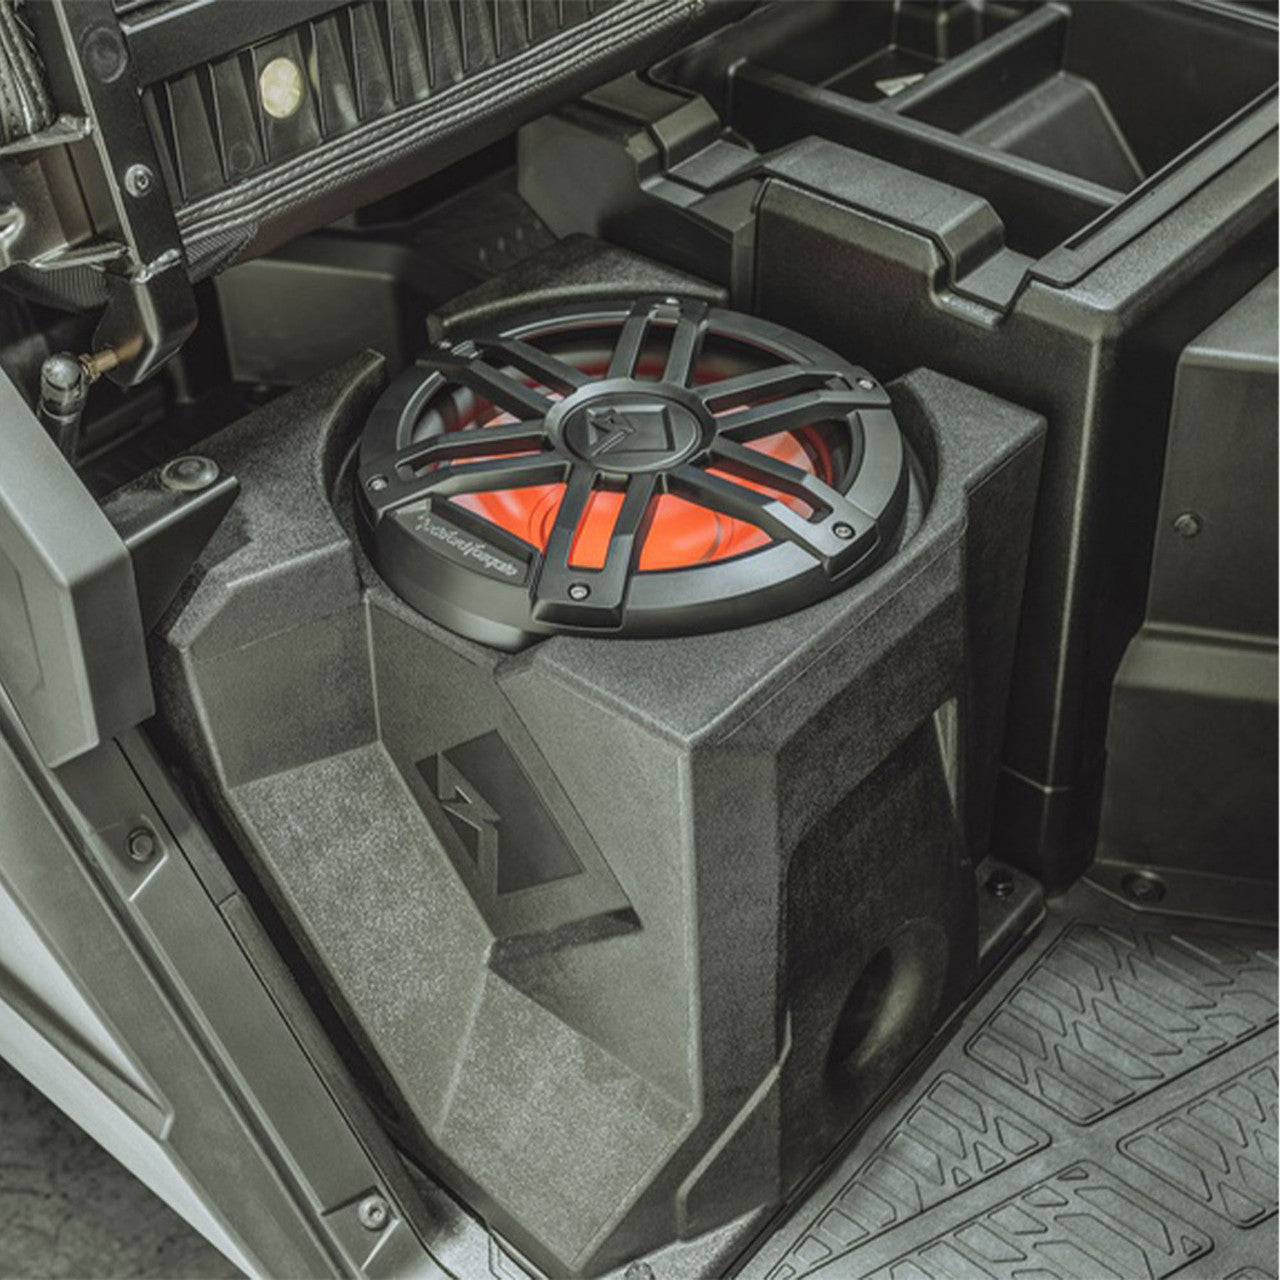 RNGR18-STG3 Pmx-2, 800w 4 Channel Amplifier, Color Optix Front Speakers & Color Optix Sub Kit Compatible With Select 2018 and up Polaris Ranger Models